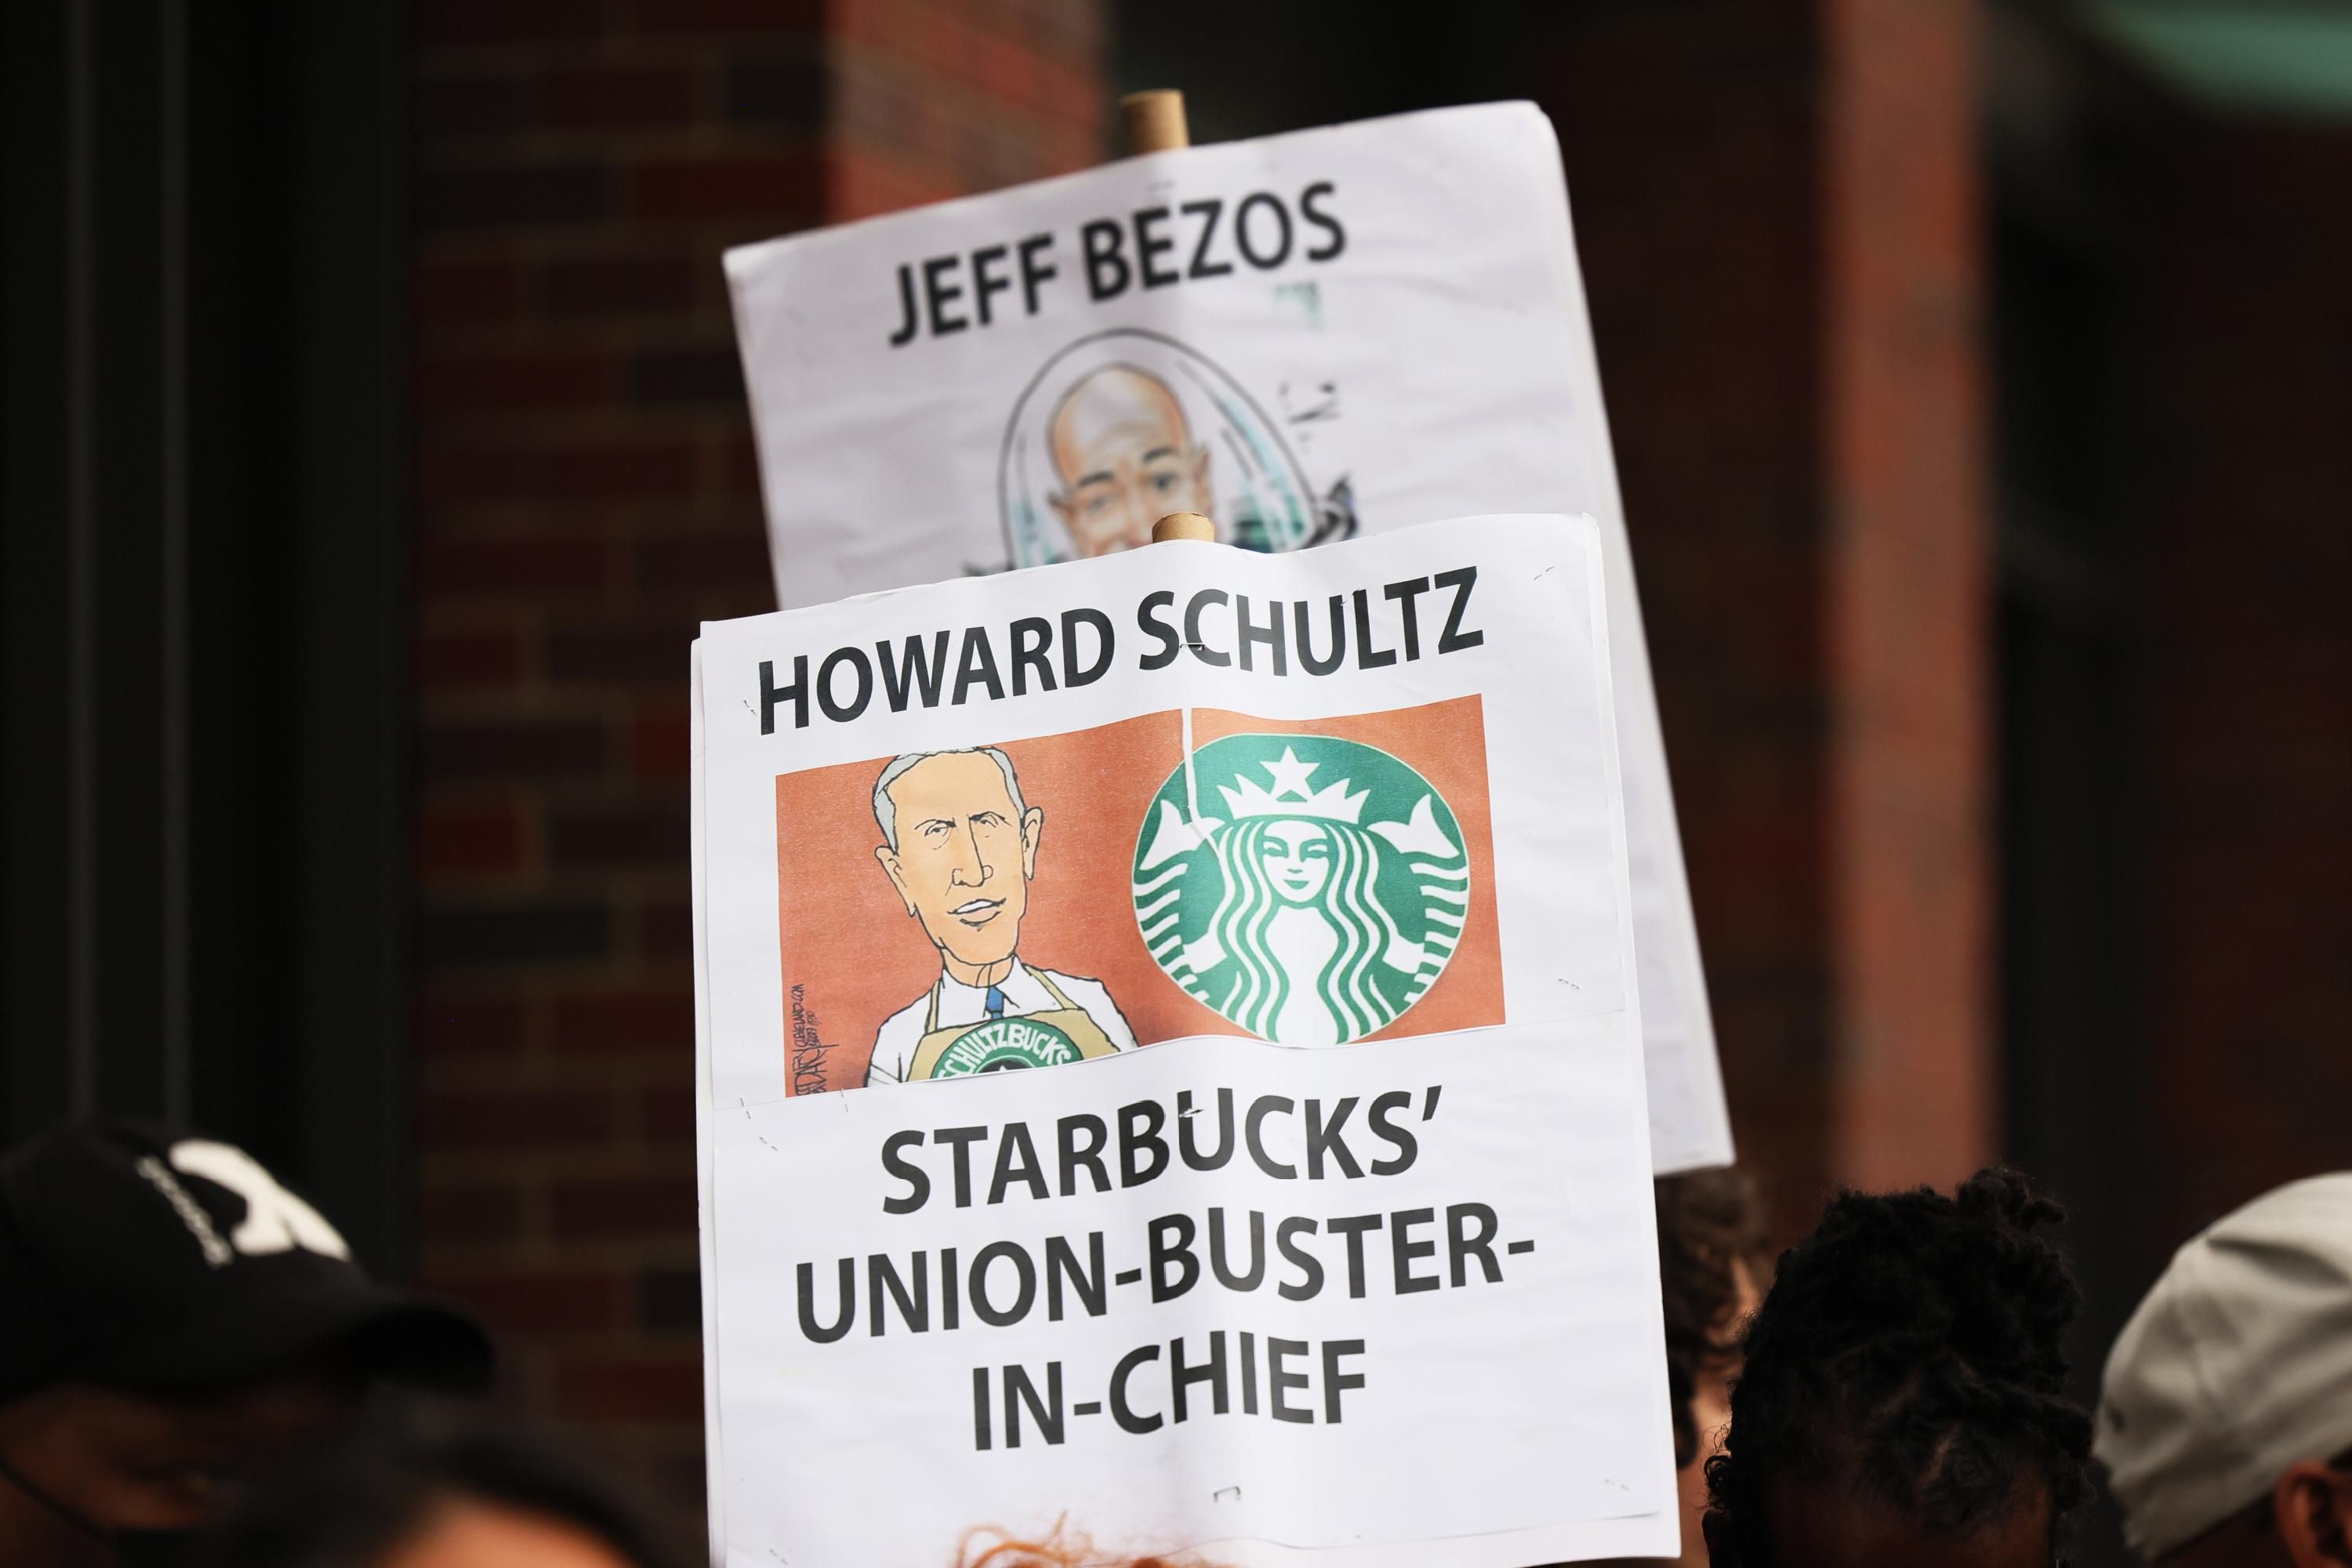 Demonstrators protest Starbucks union-busting